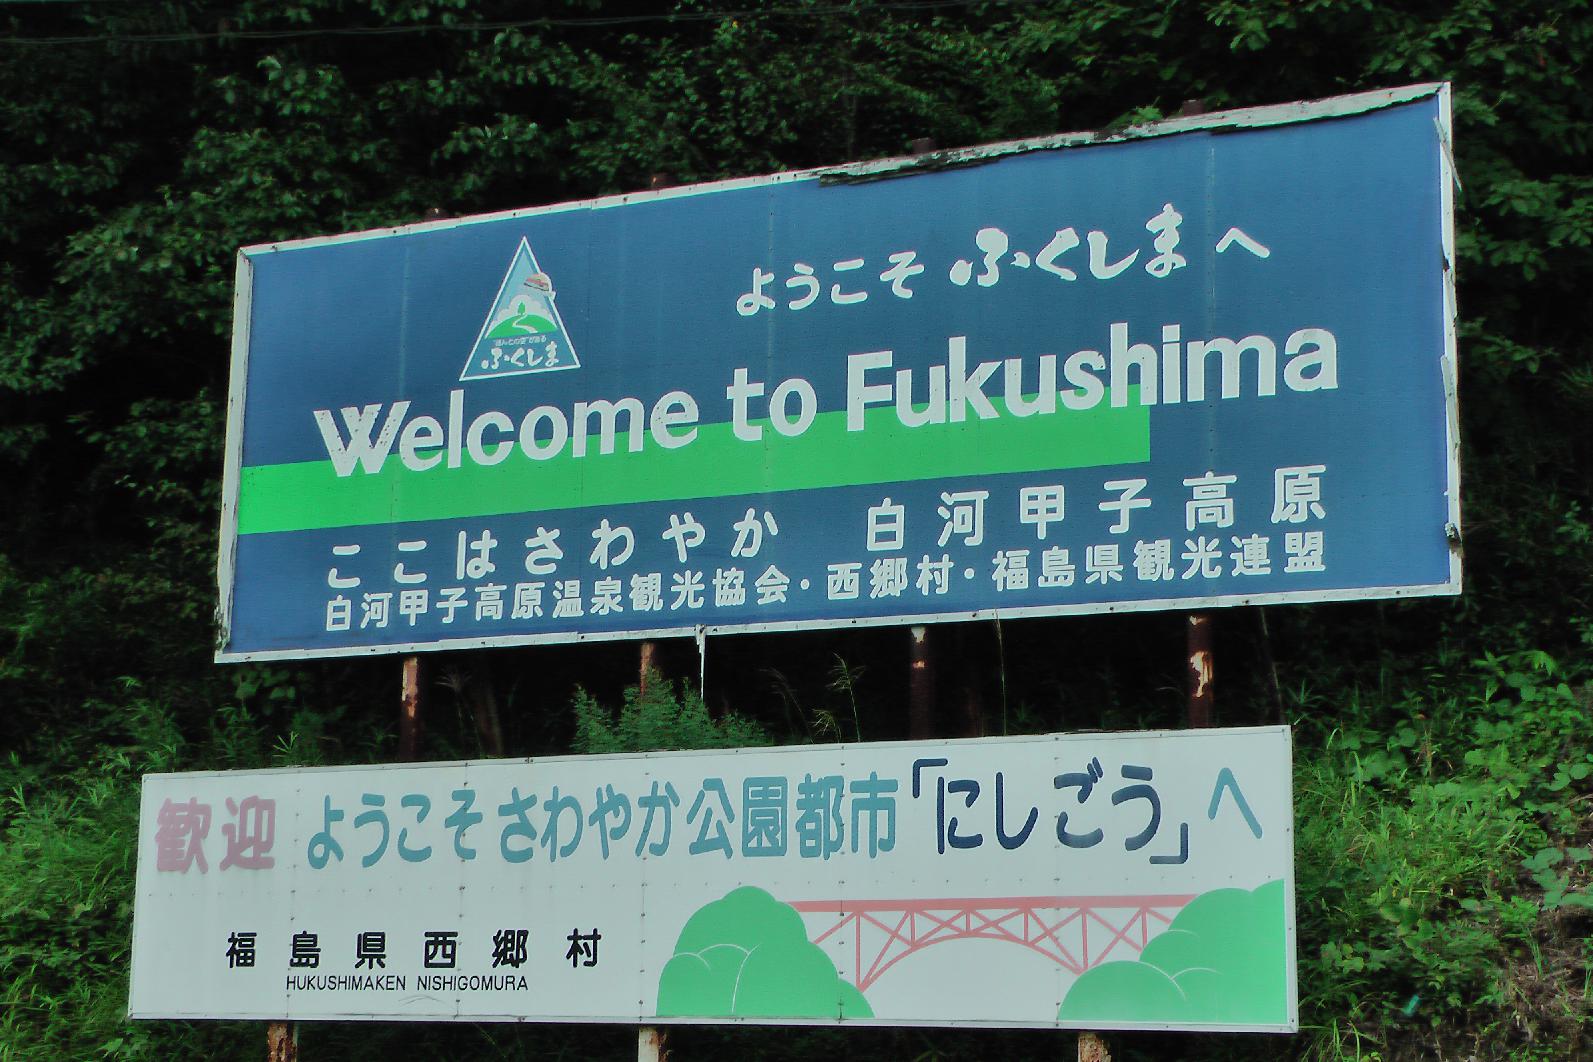 In Fukushima!